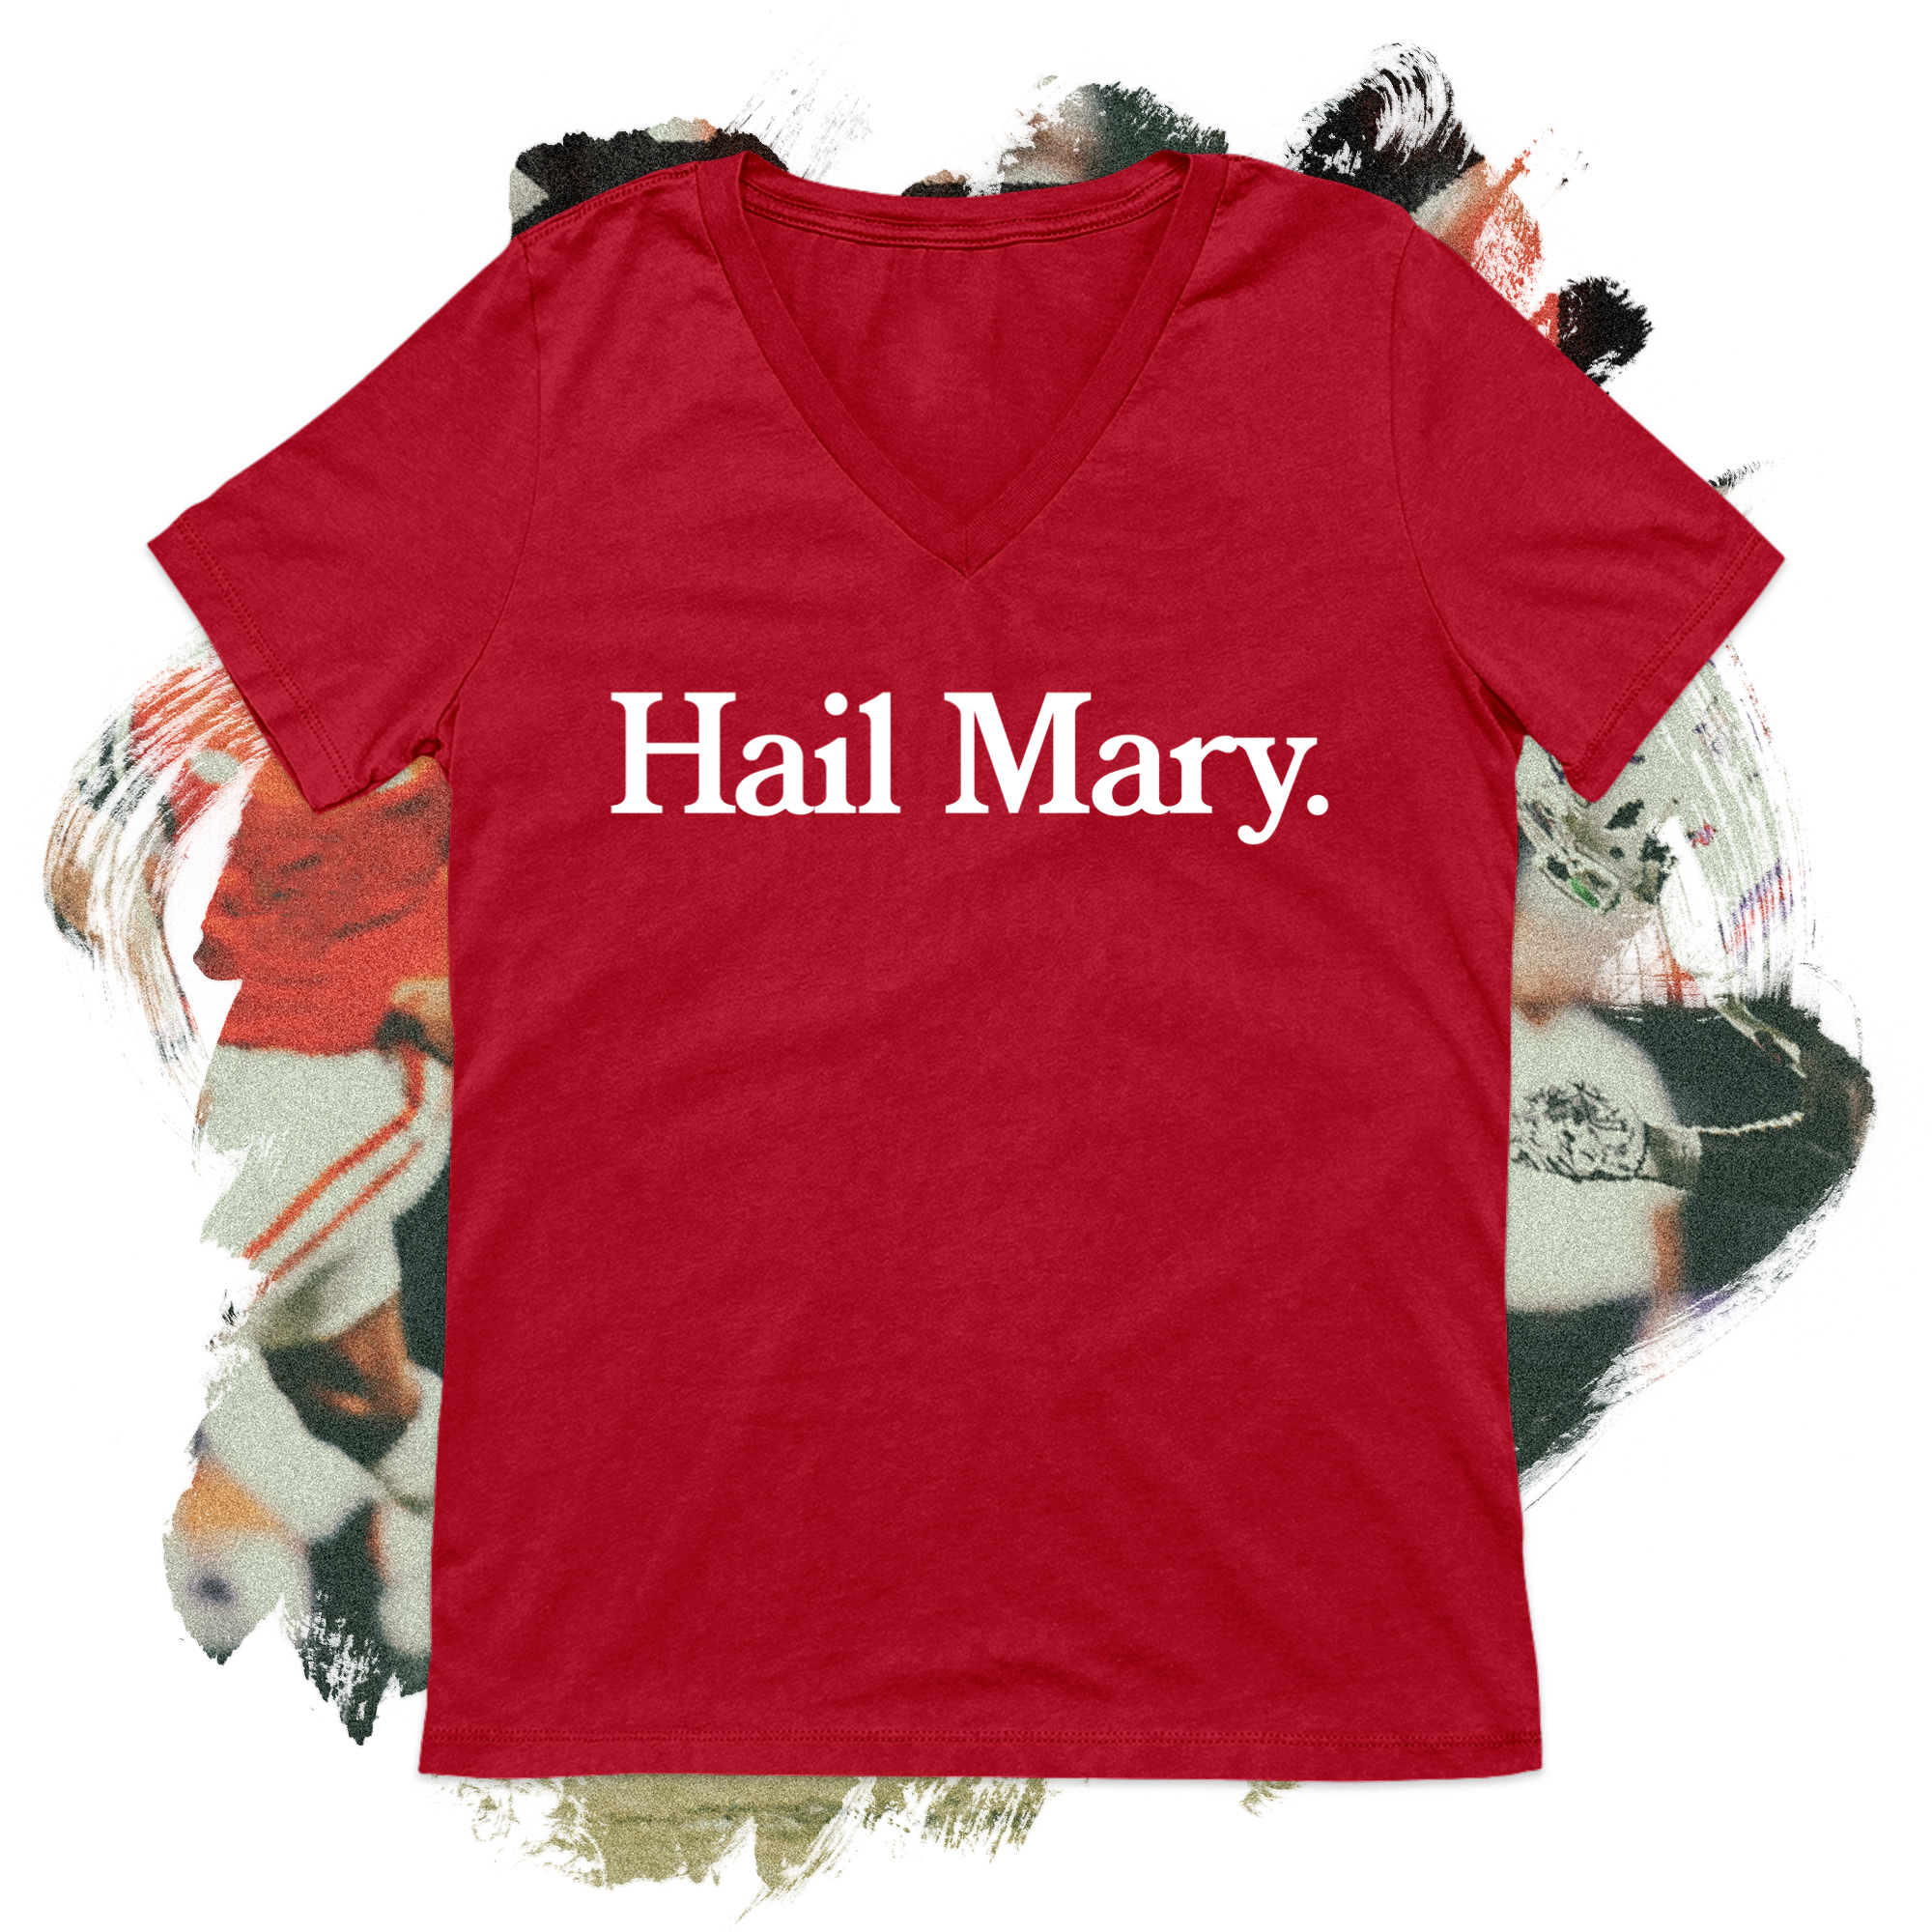 Hail Mary White V-Neck